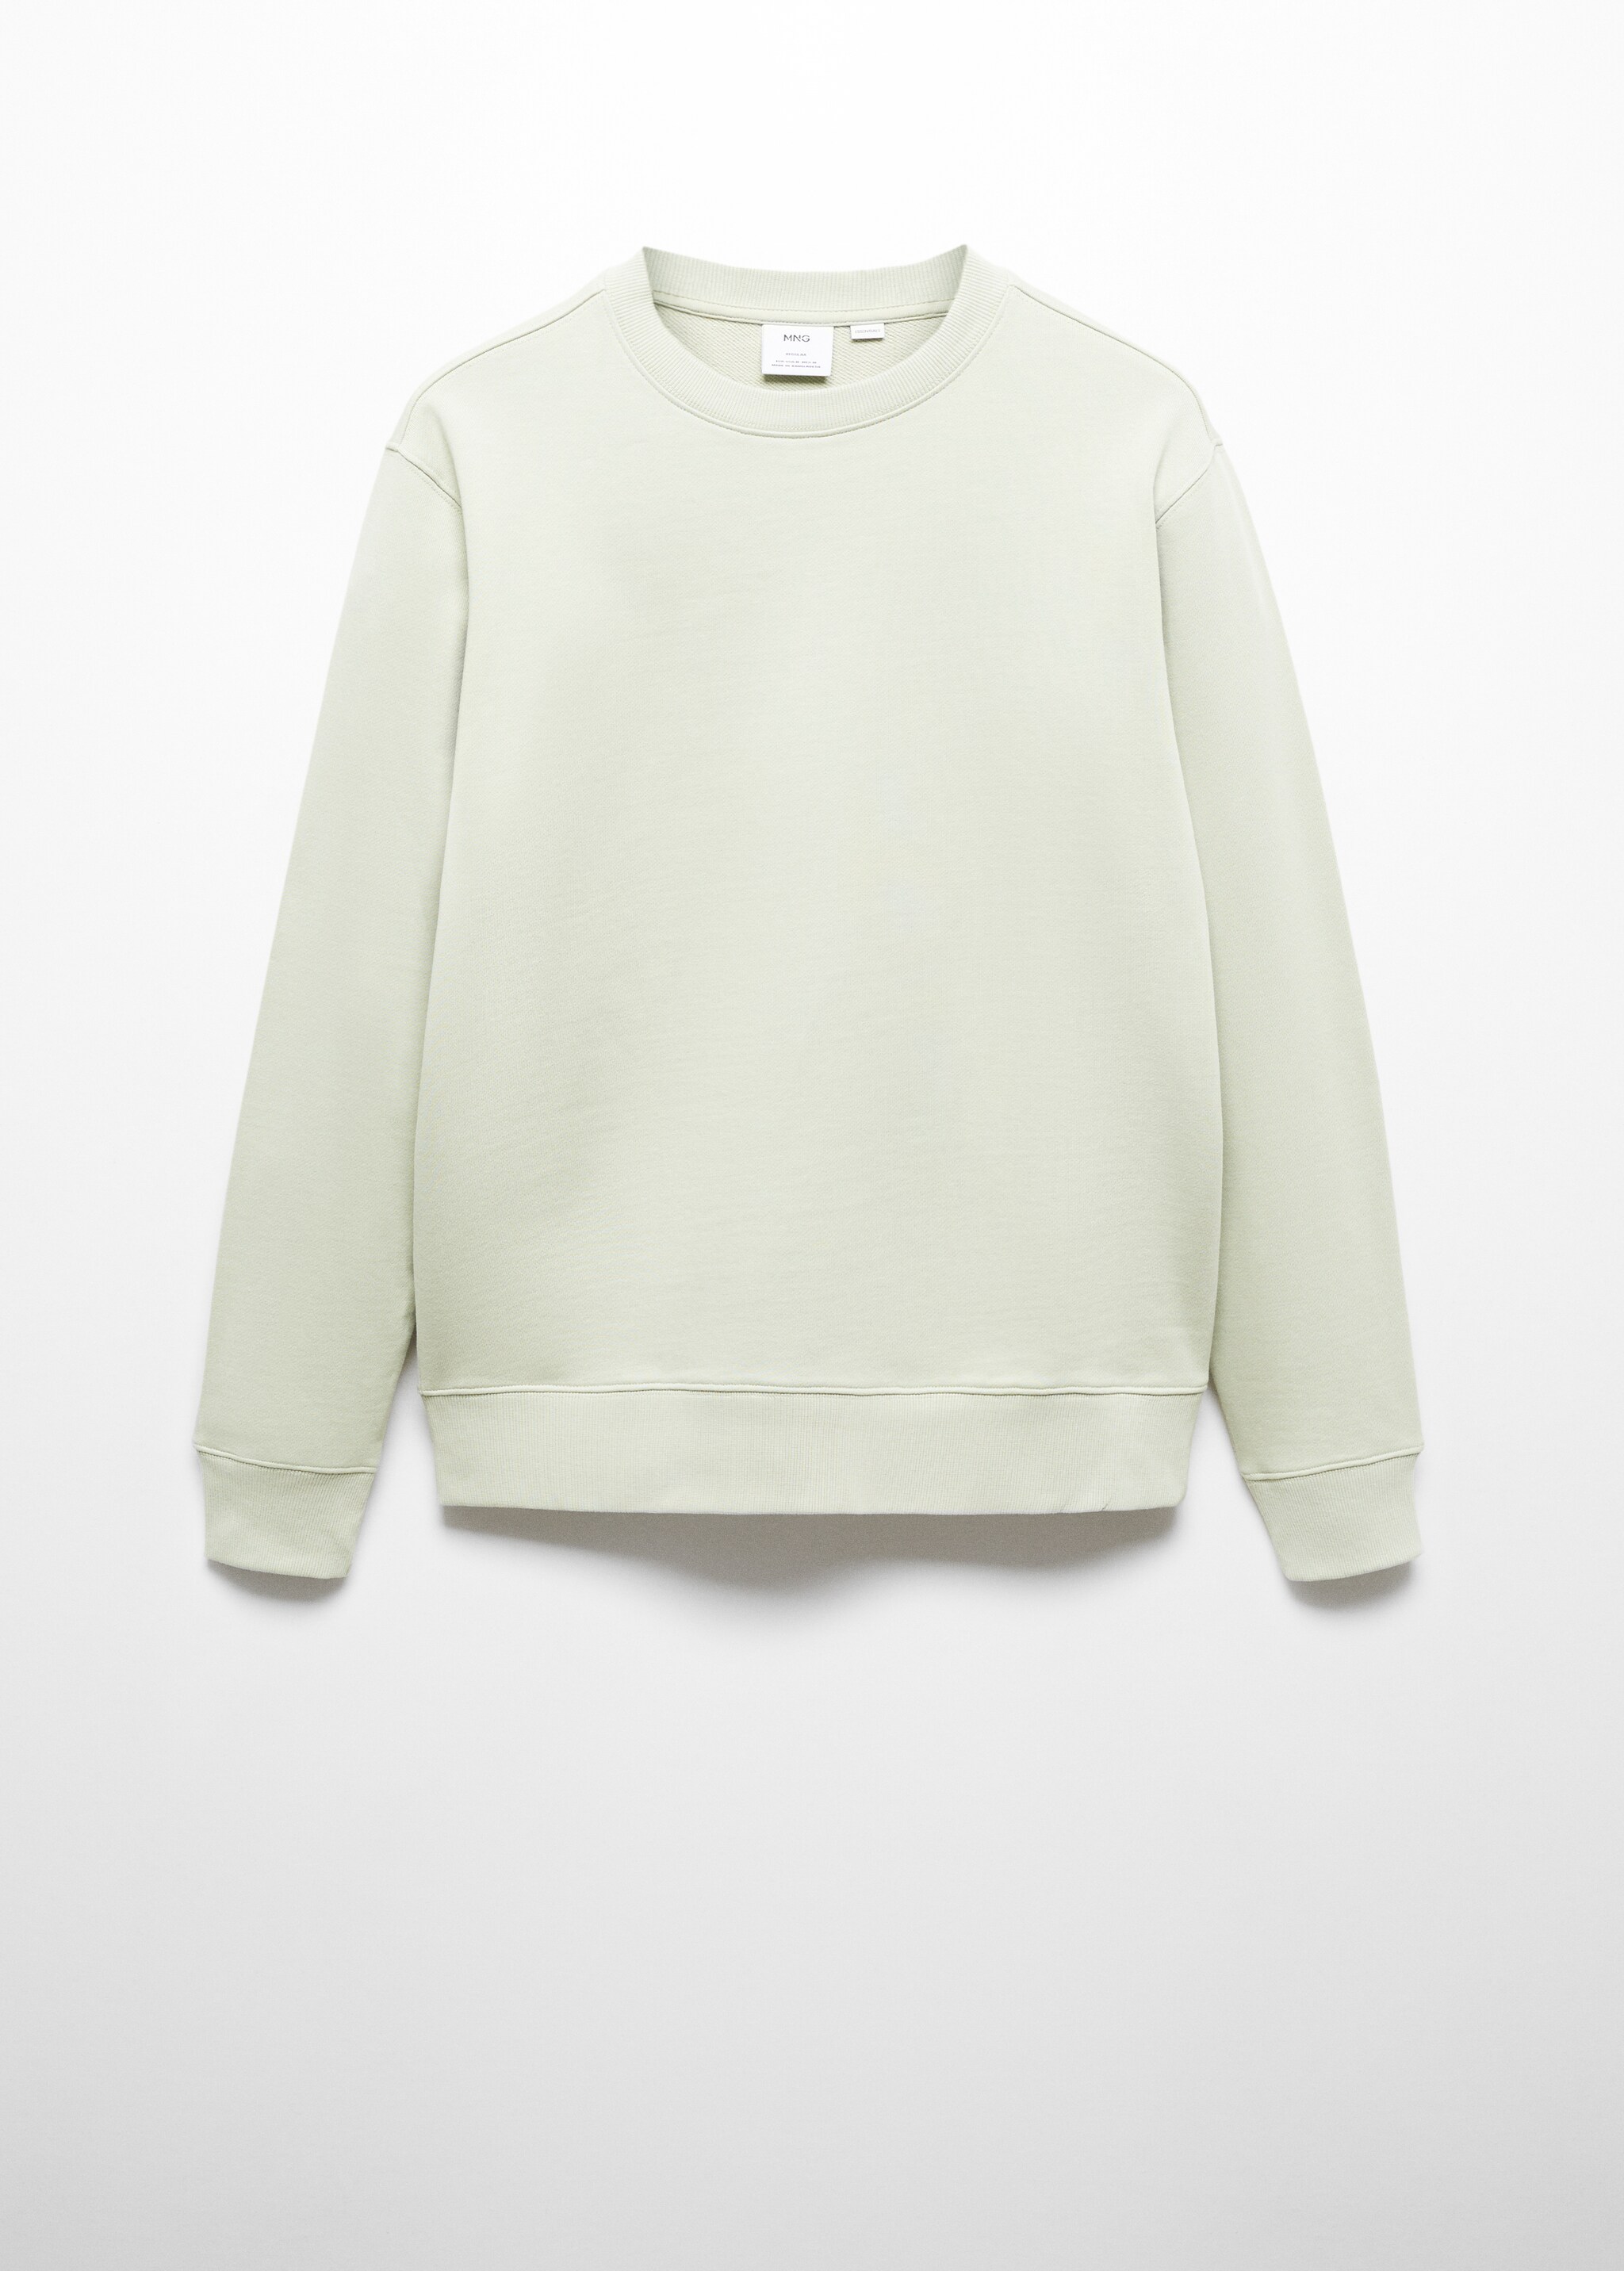 %100 pamuklu basic sweatshirt - Modelsiz ürün